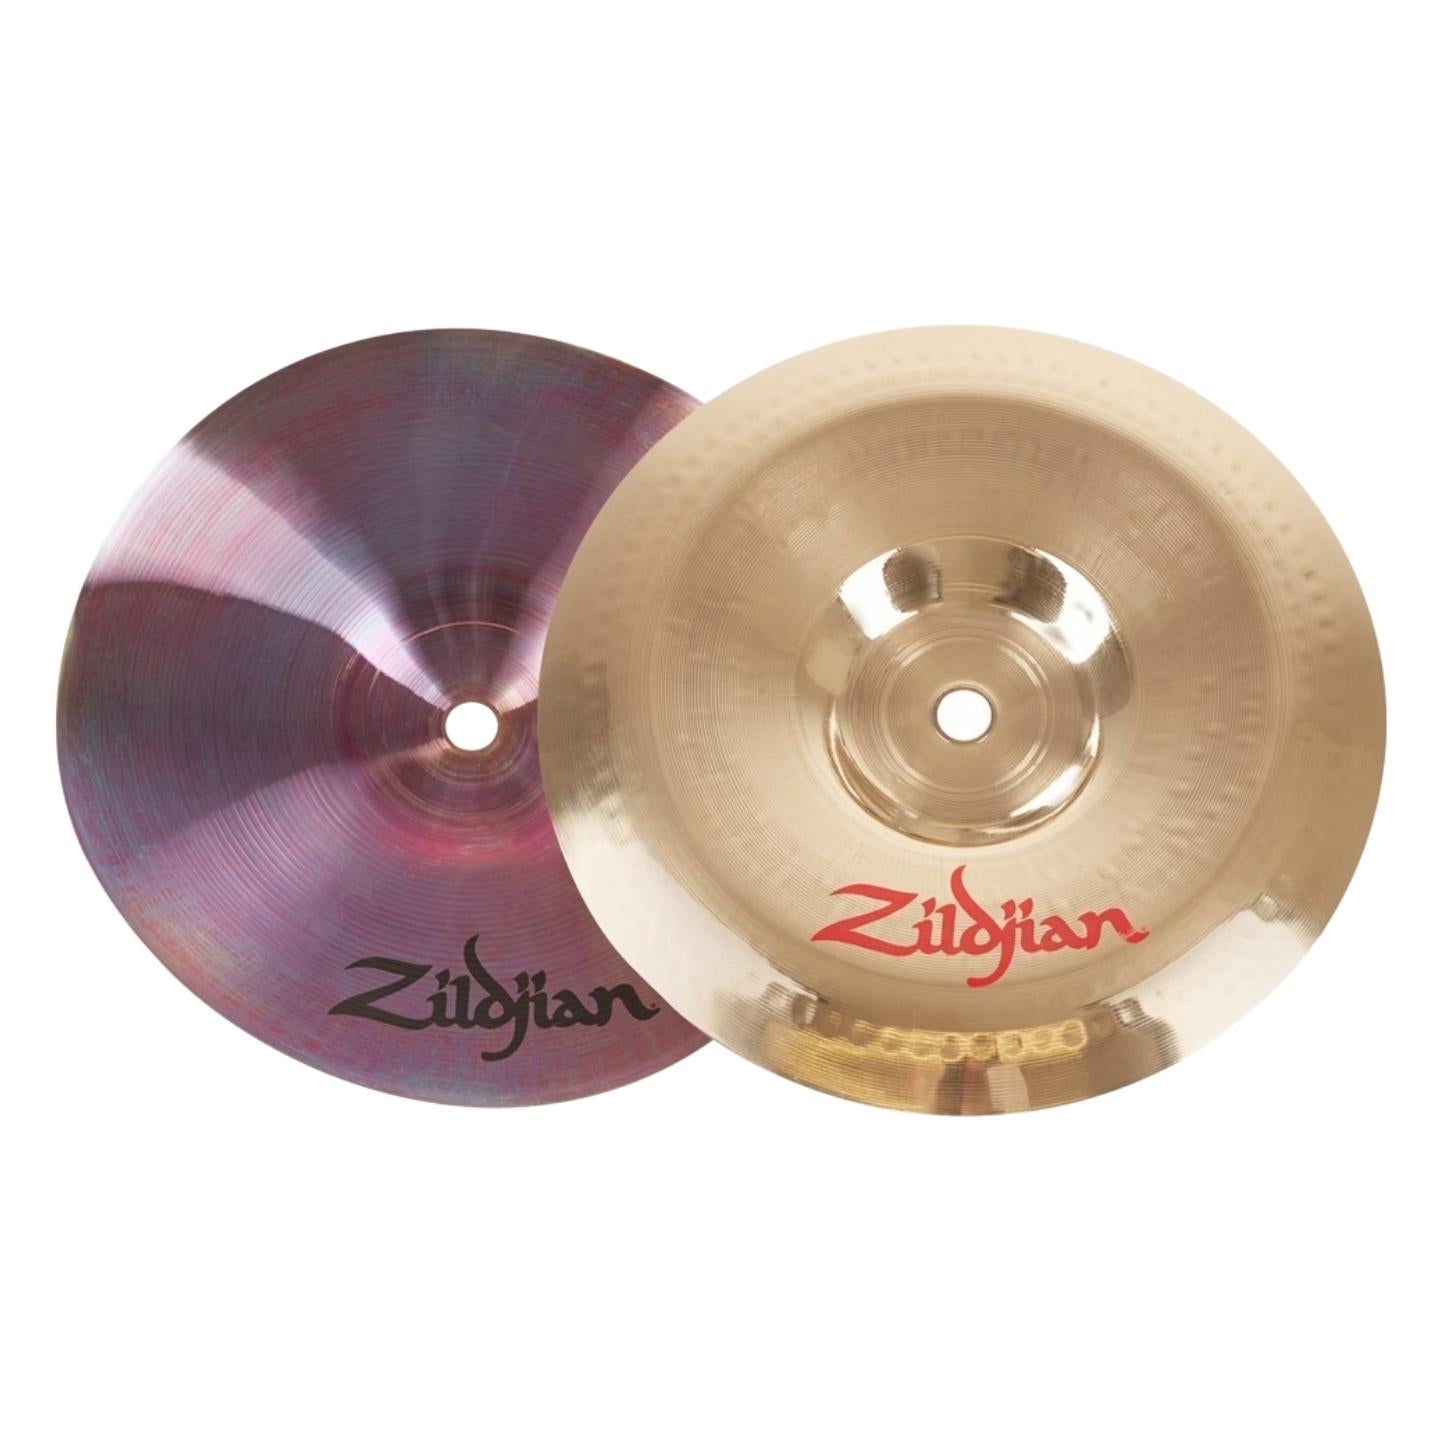 Zildjian Pre-Configured 8